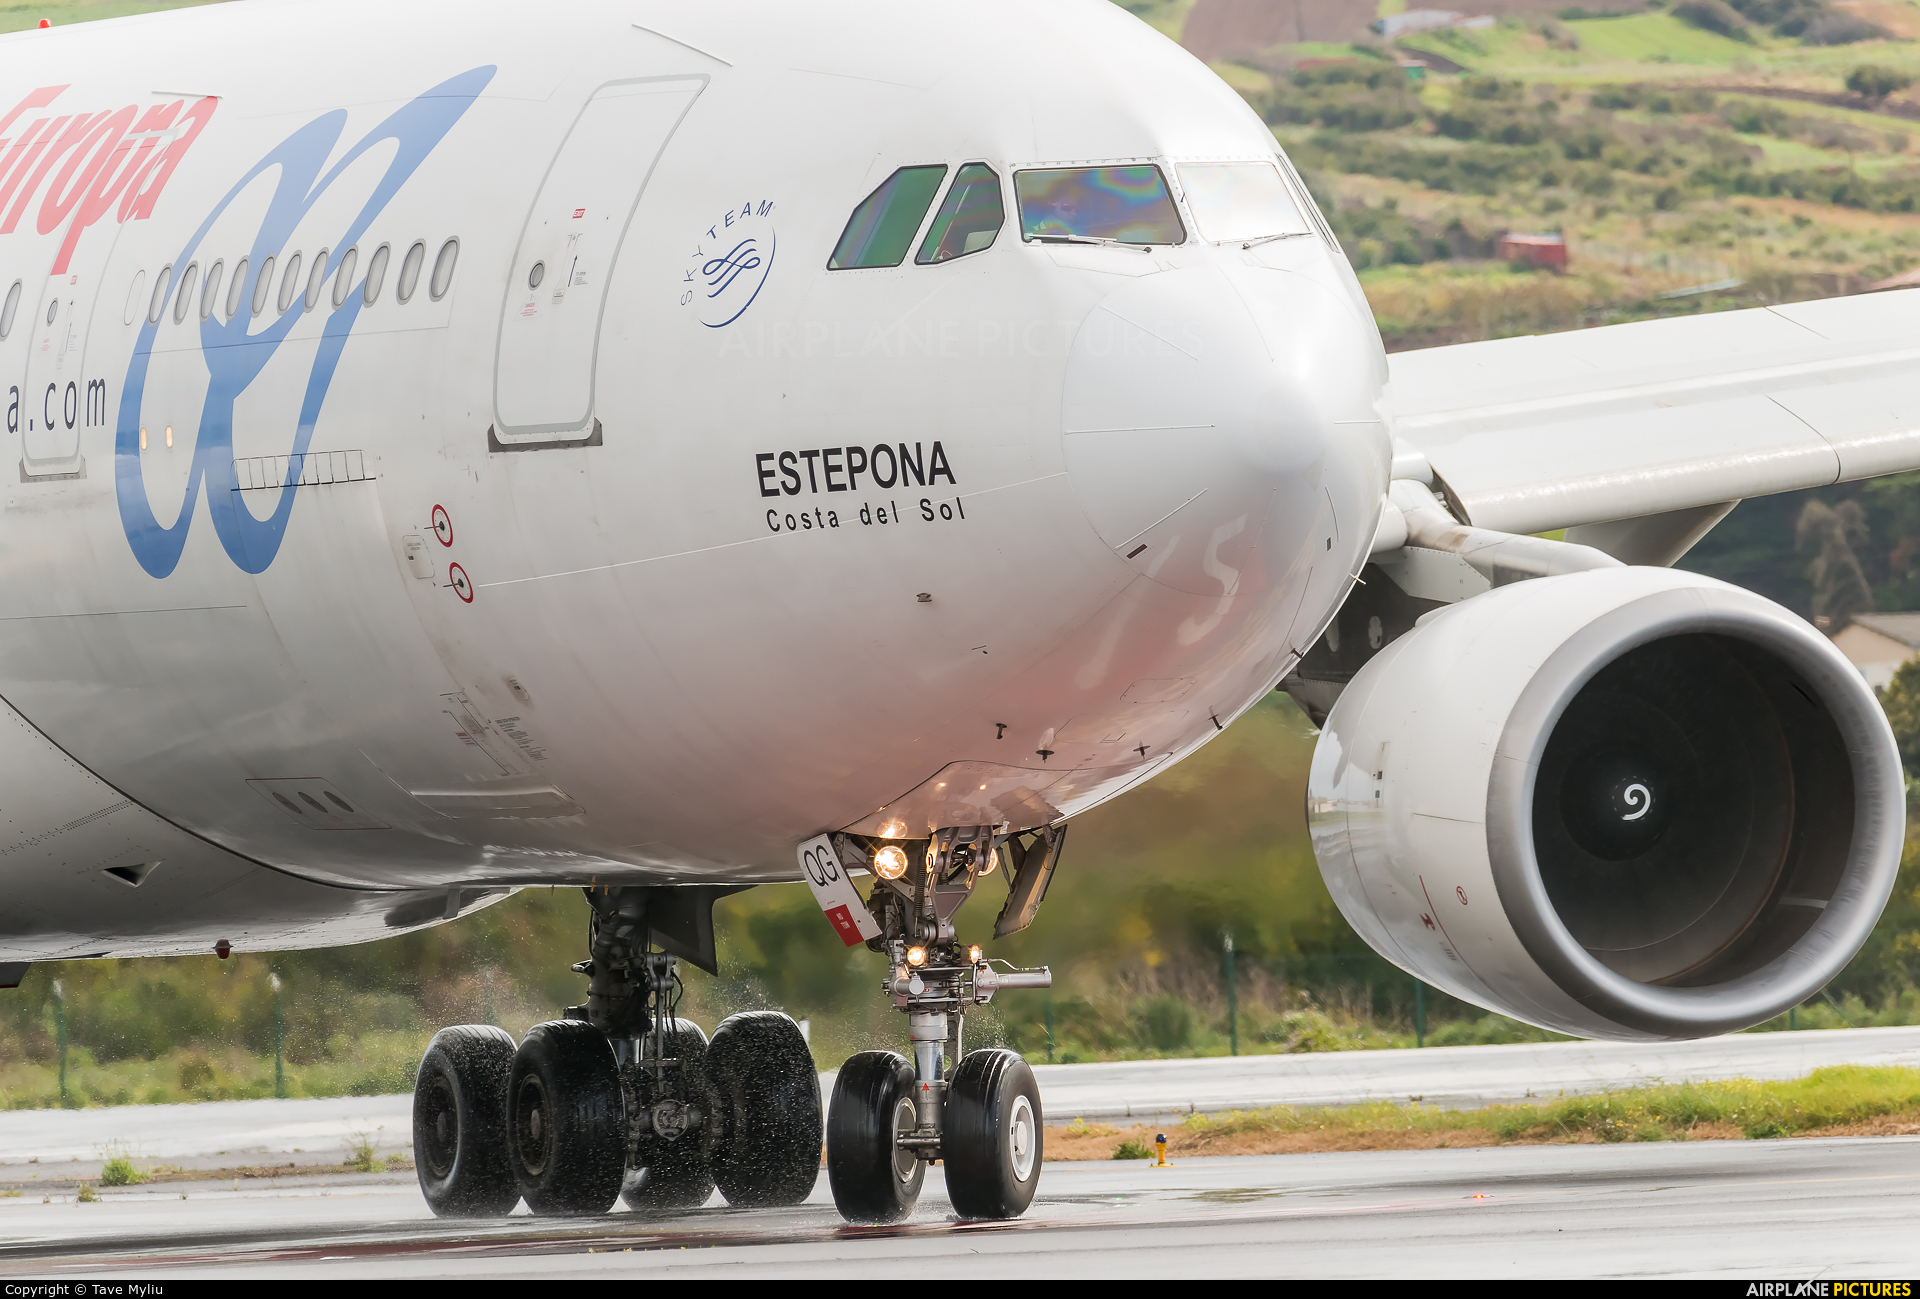 Air Europa EC-JQG aircraft at Tenerife Norte - Los Rodeos